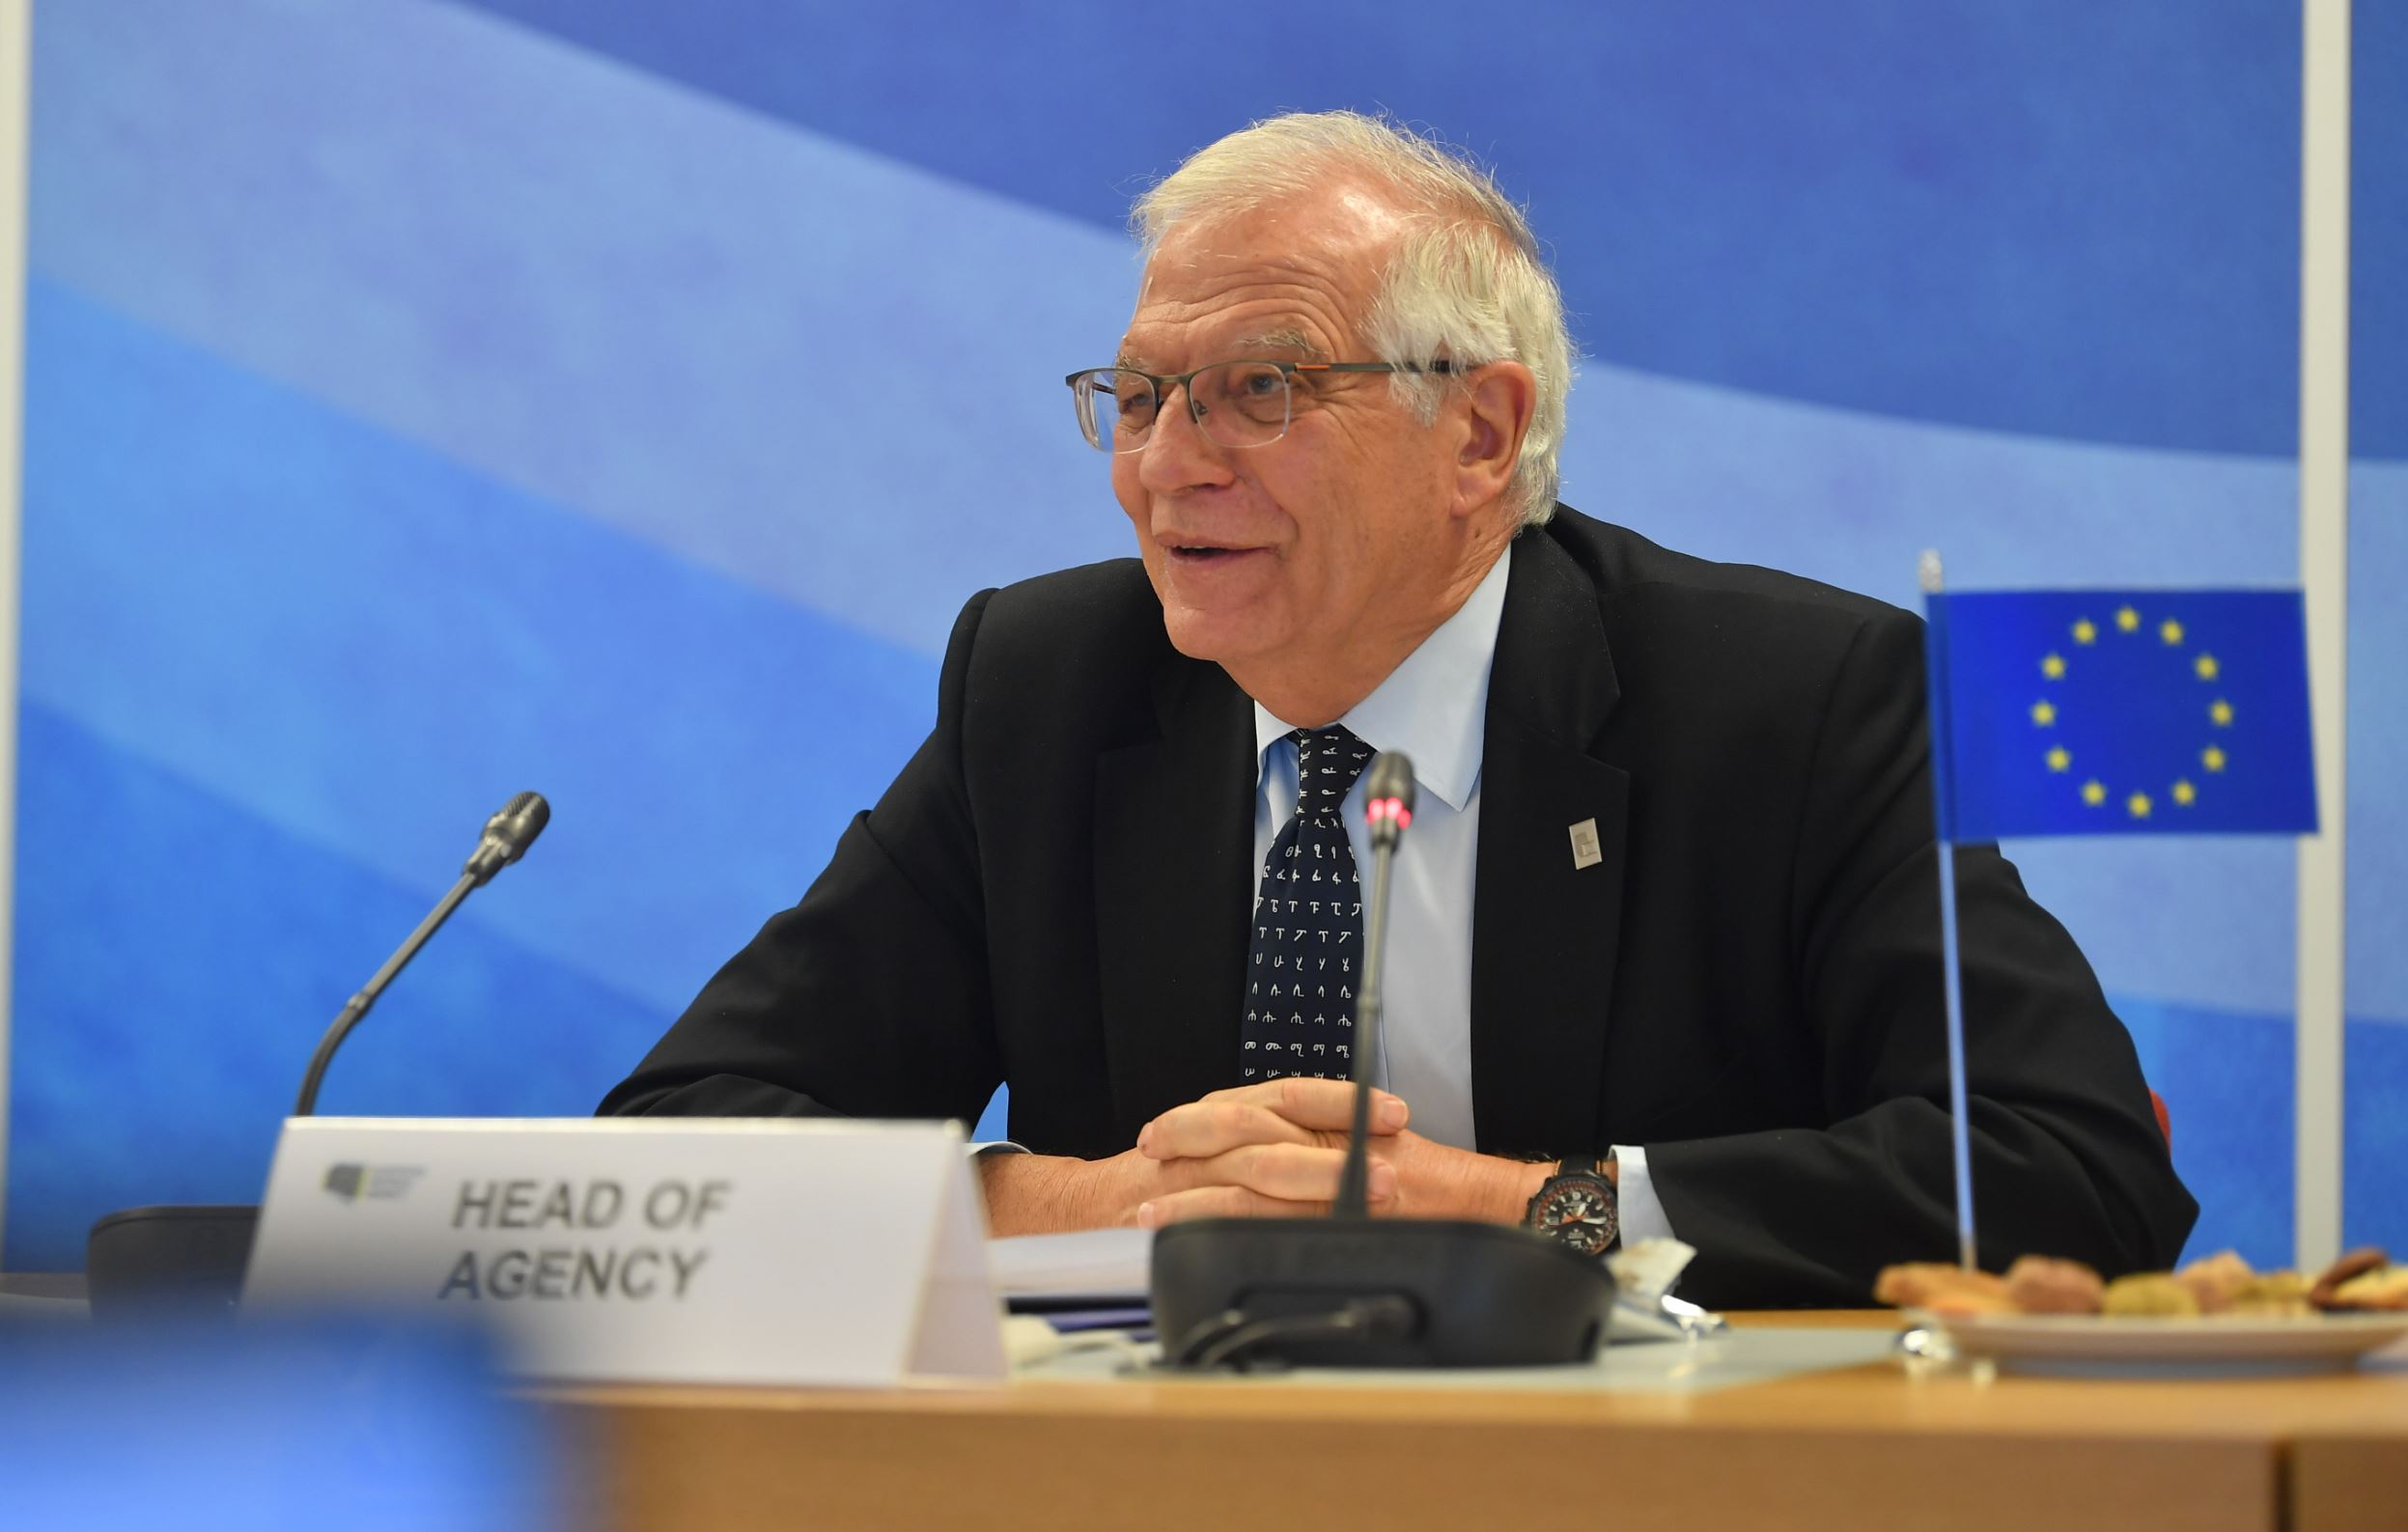 HRVP Josep Borrell visits the European Defence Agency